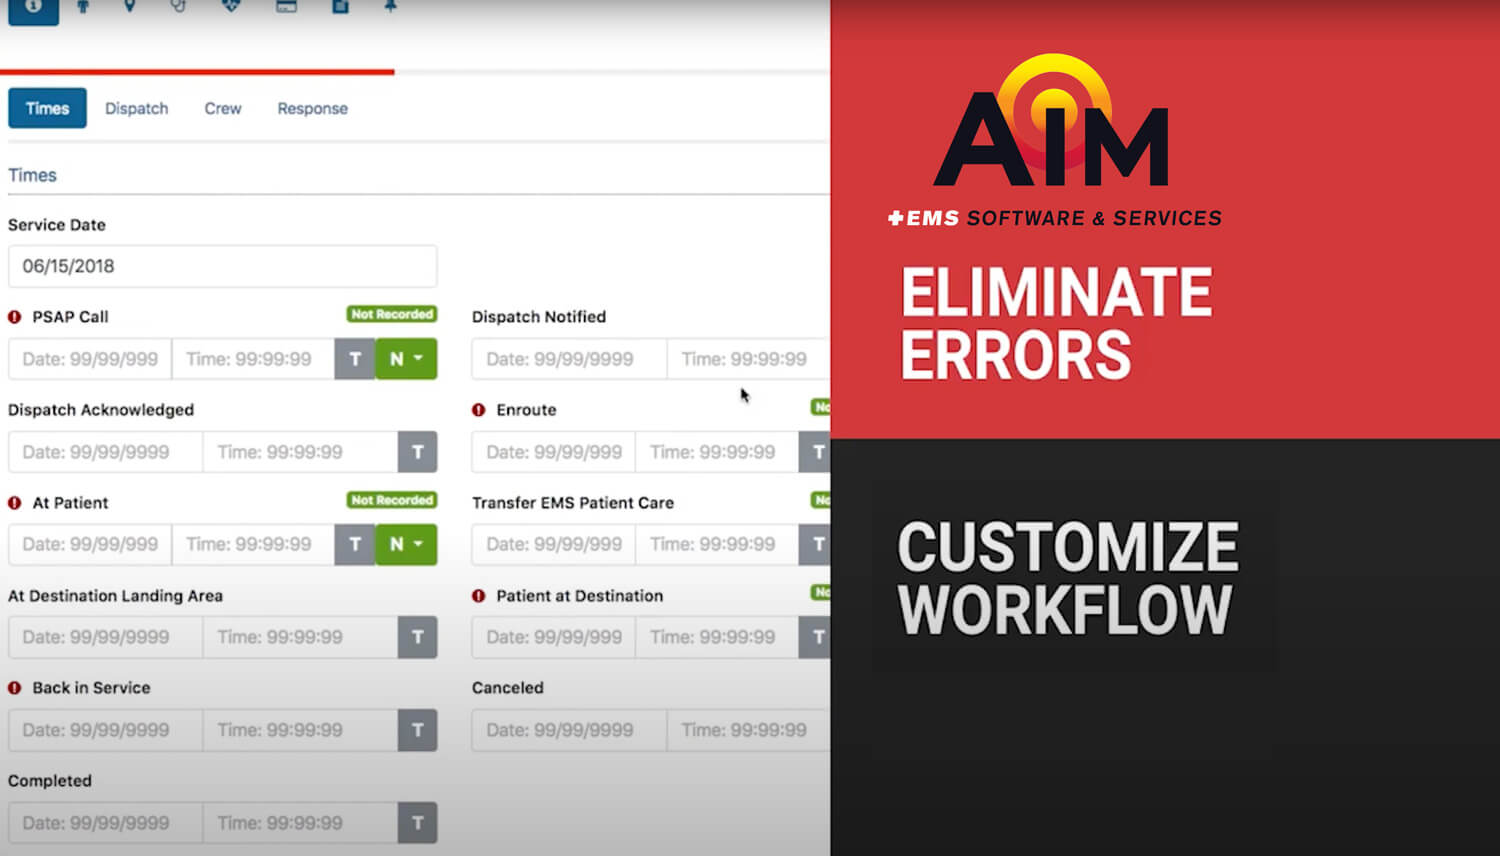 Eliminate-Errors-Customize-Workflow (1)